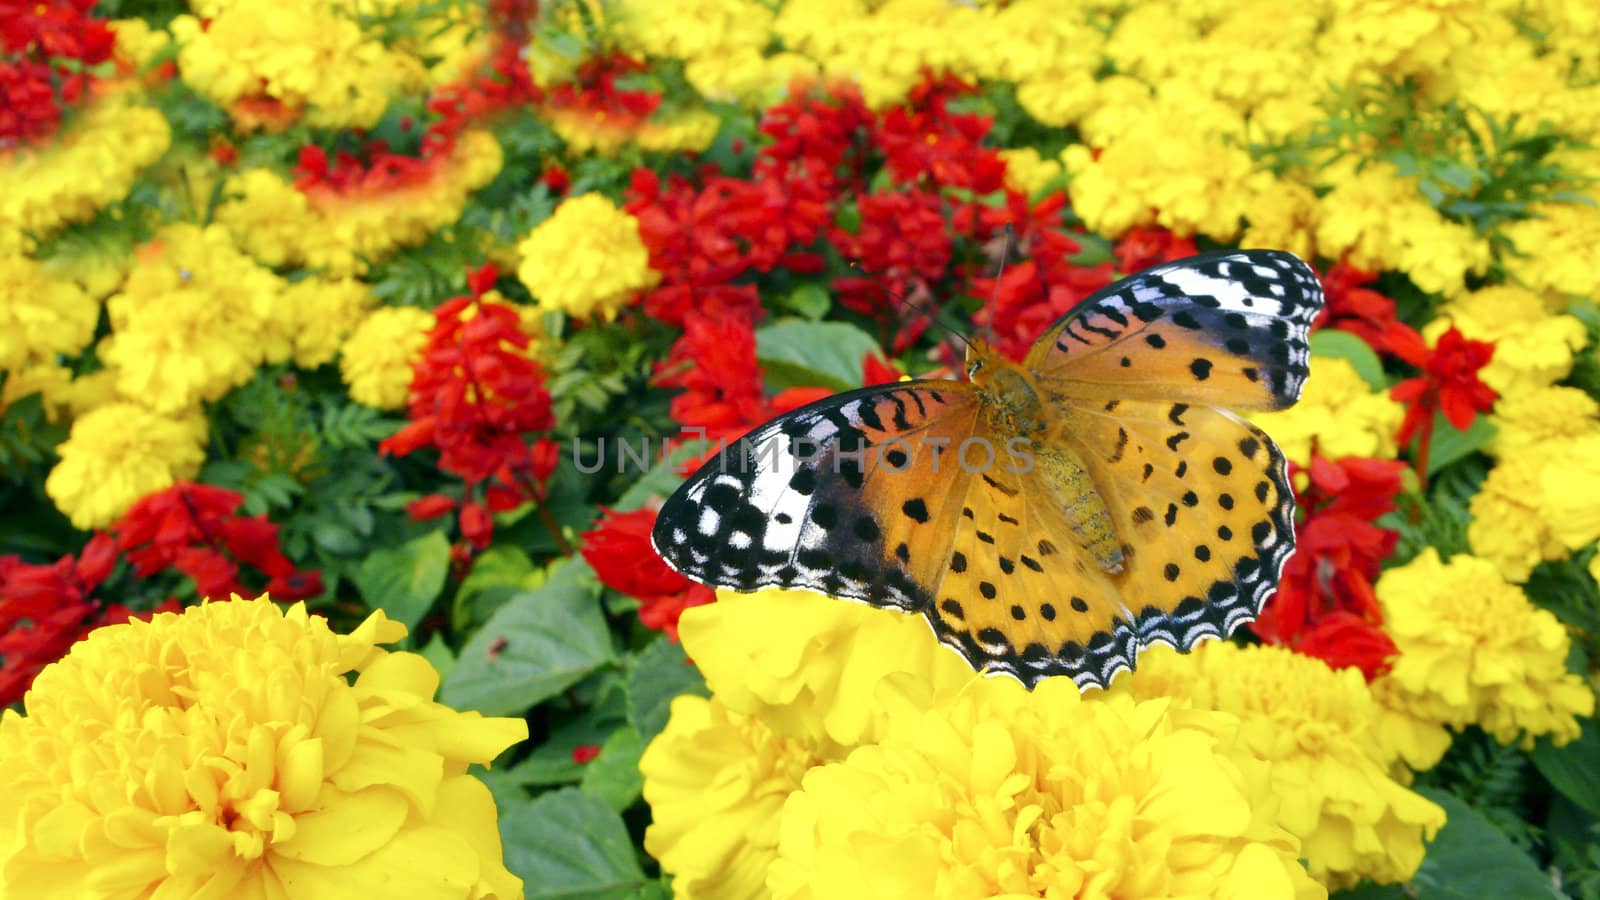 Flowers in the butterfly